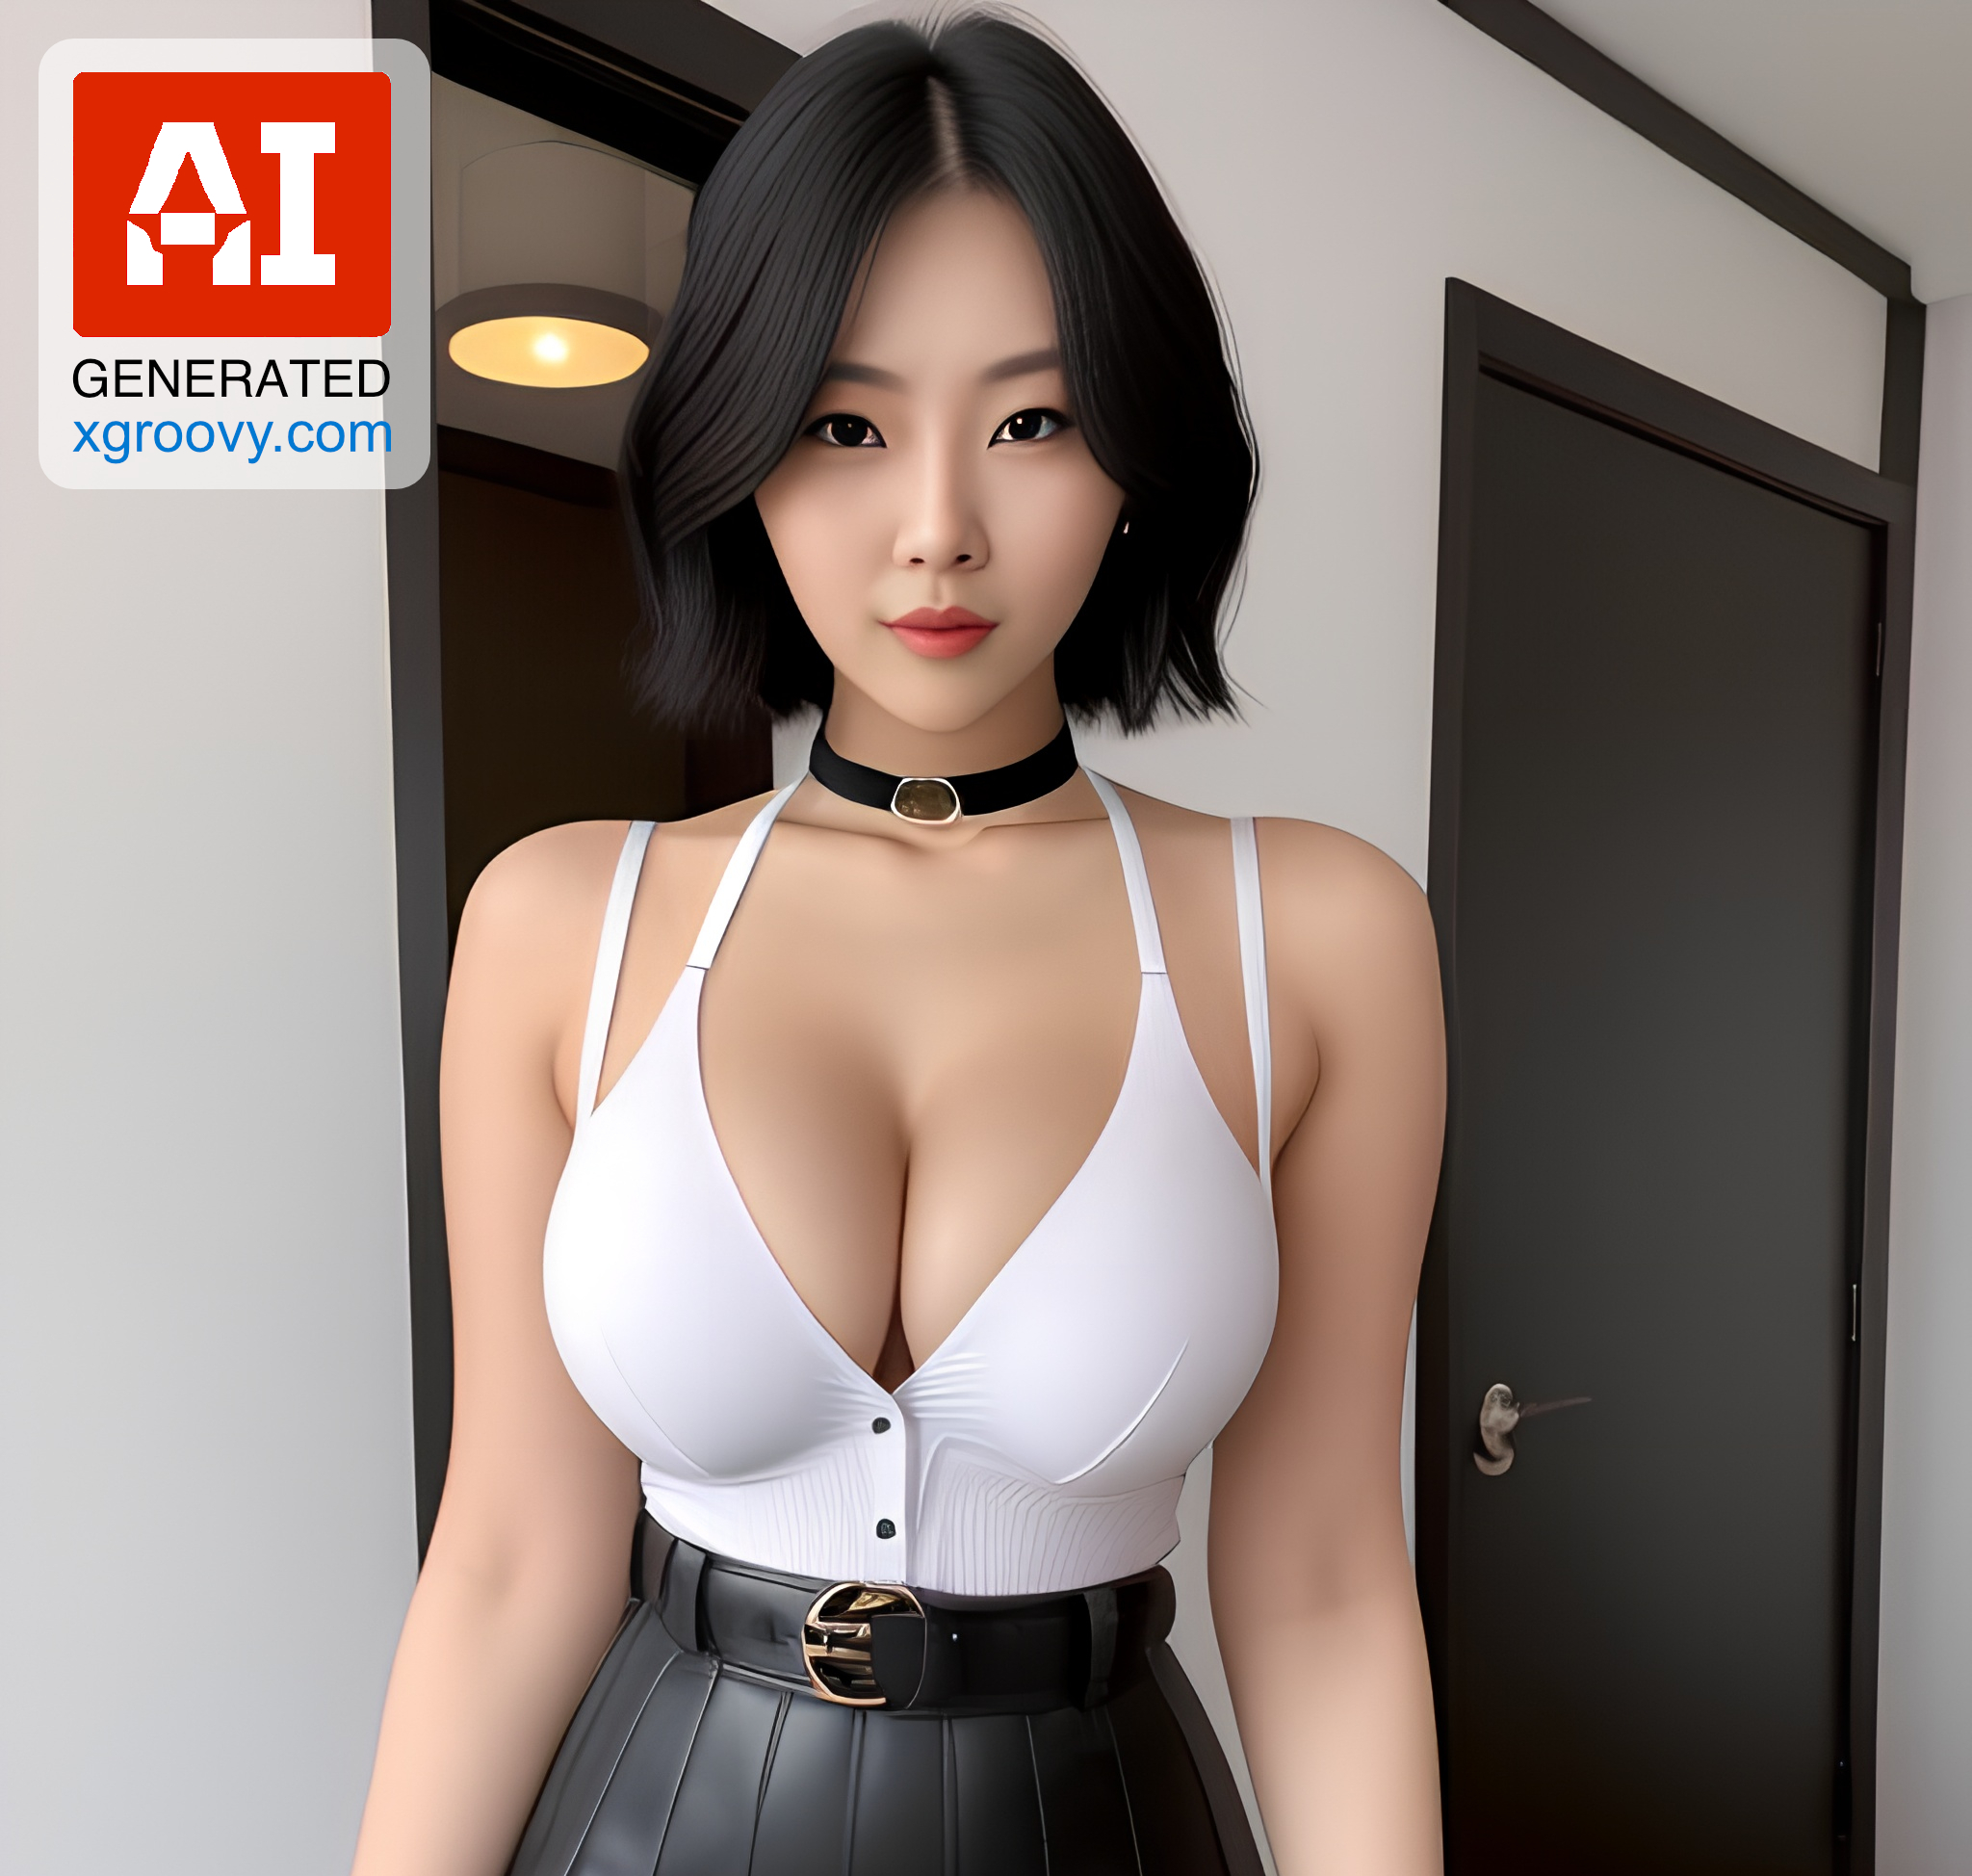 Short Hair Webcam Handjob - Korean beauty, short hair, big hips, perfect body in a mini skirt & choker.  I'd